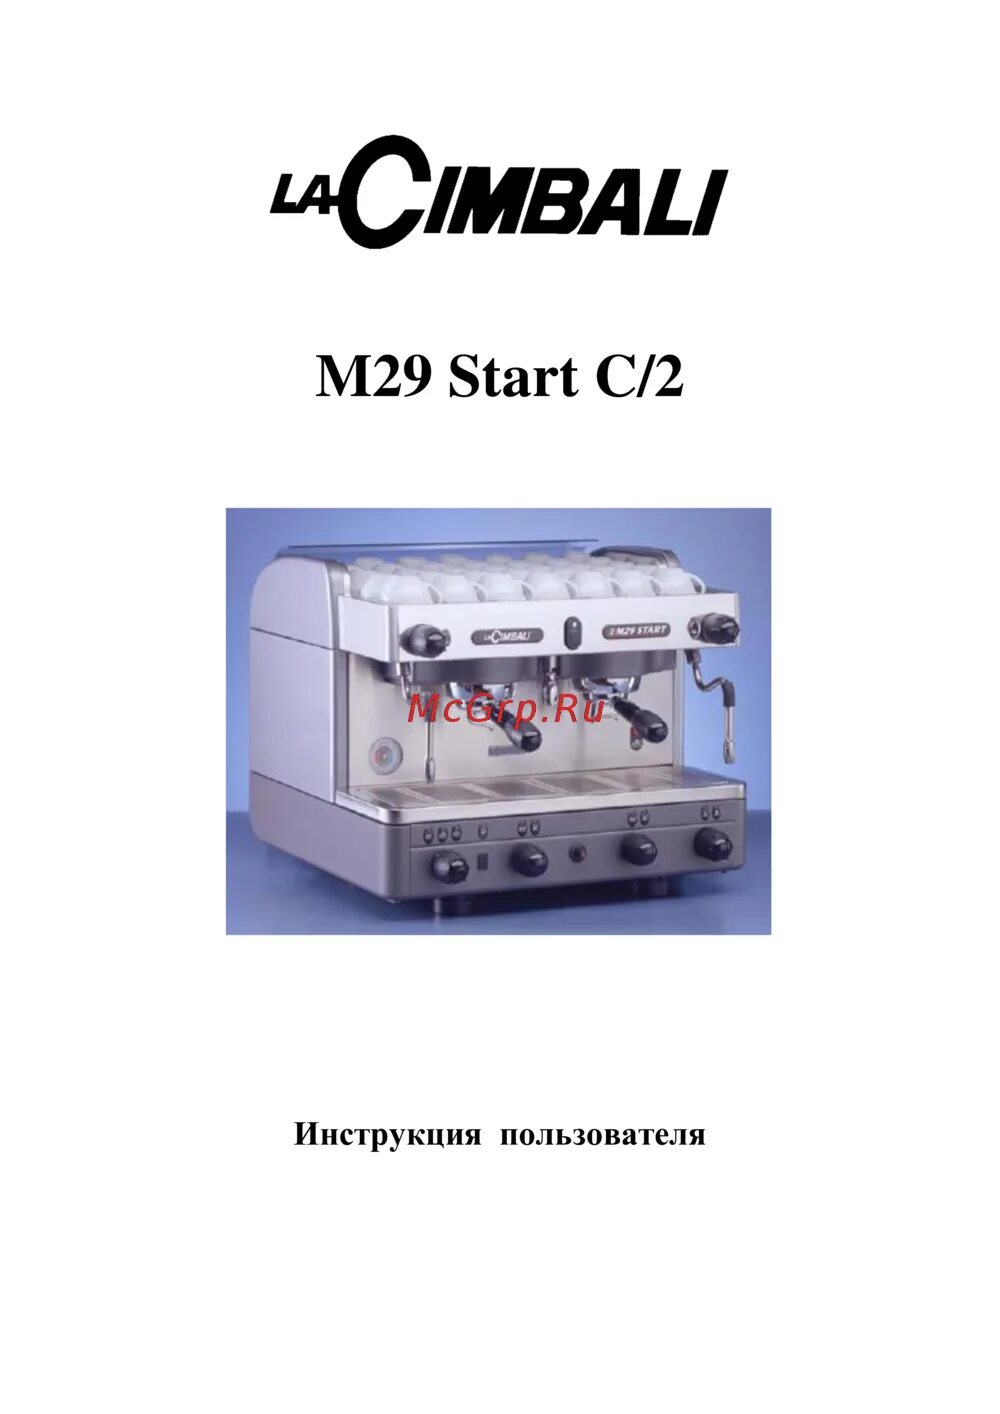 29 start. Кофемашина la Cimbali m29 start. La Cimbali m29 start c/2. La Cimbali m29 manual. La Cimbali Junior схема.